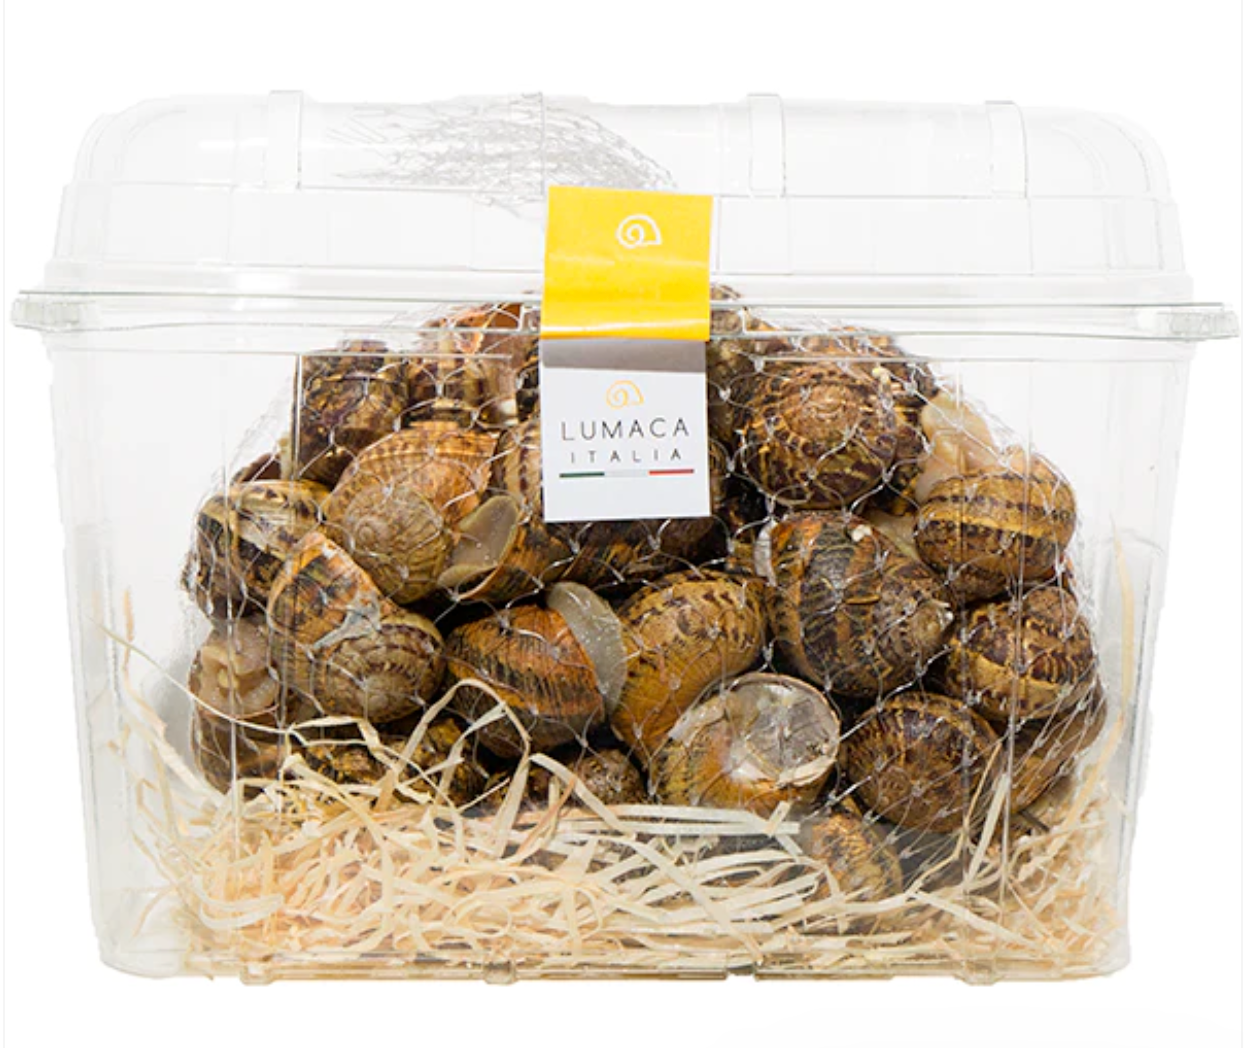 Polenta, truffle and snails kit